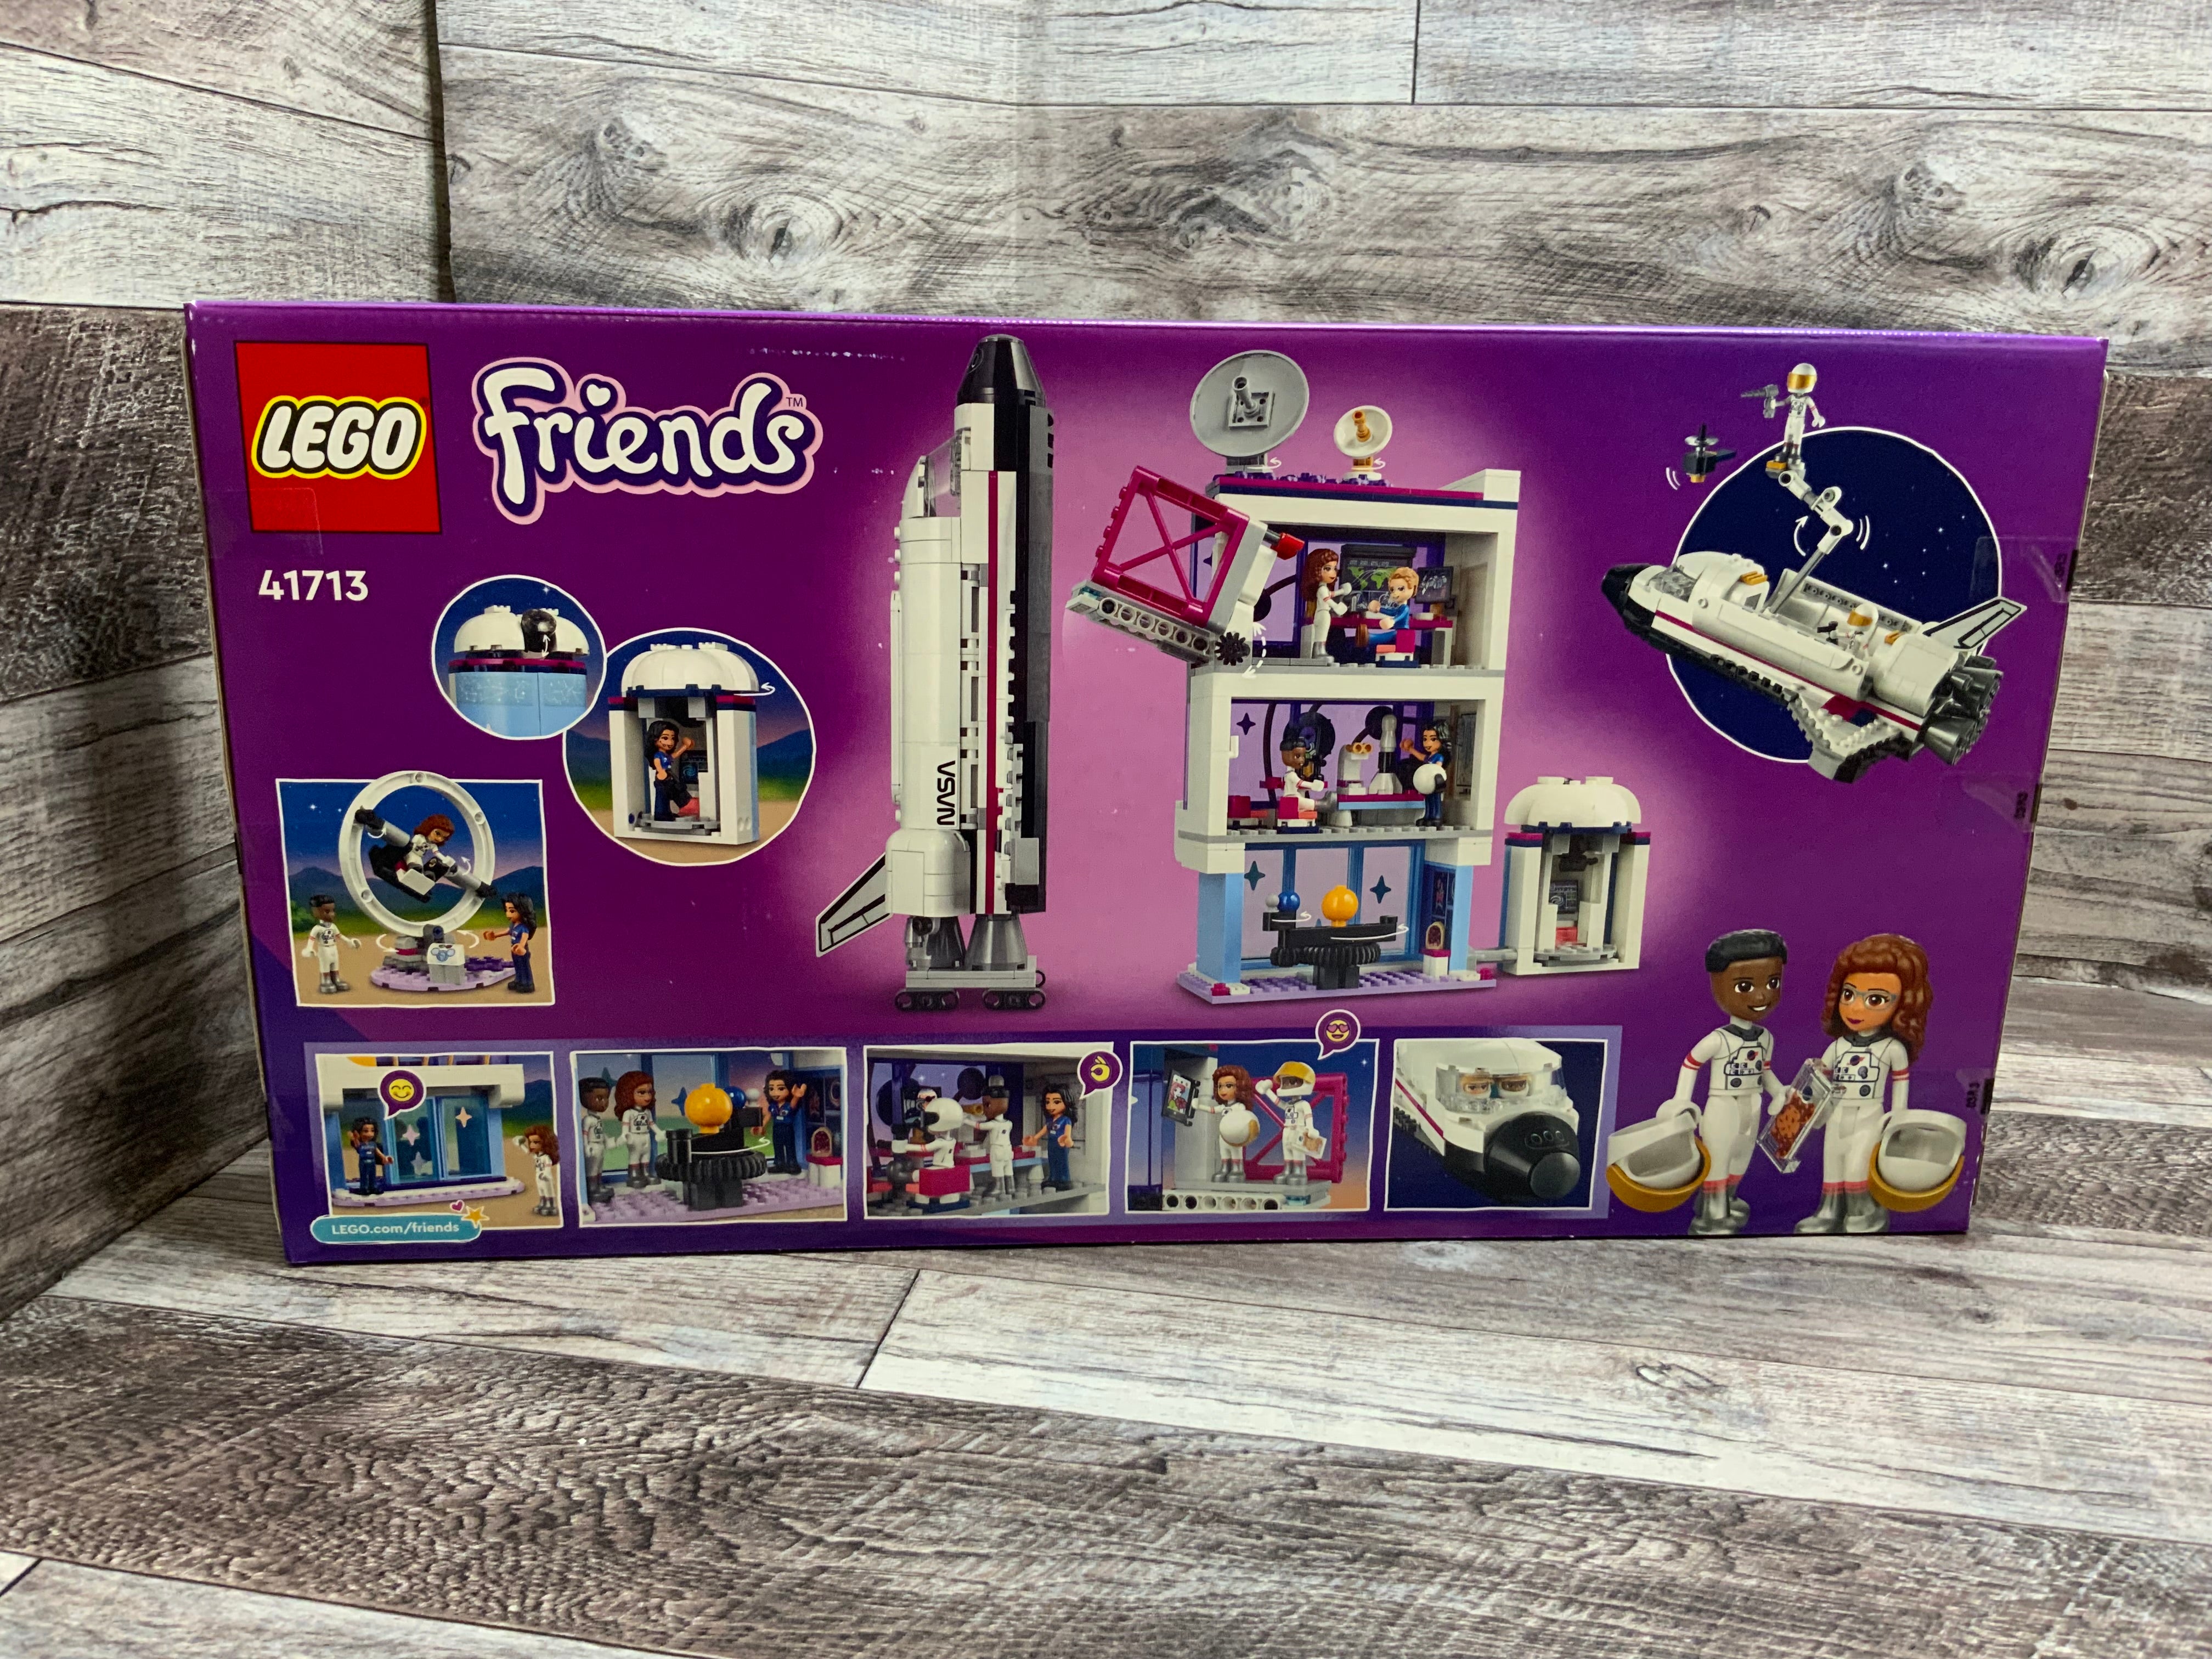 LEGO Friends Olivia’s Space Academy Shuttle Rocket Building Set (41713) (8080288415982)